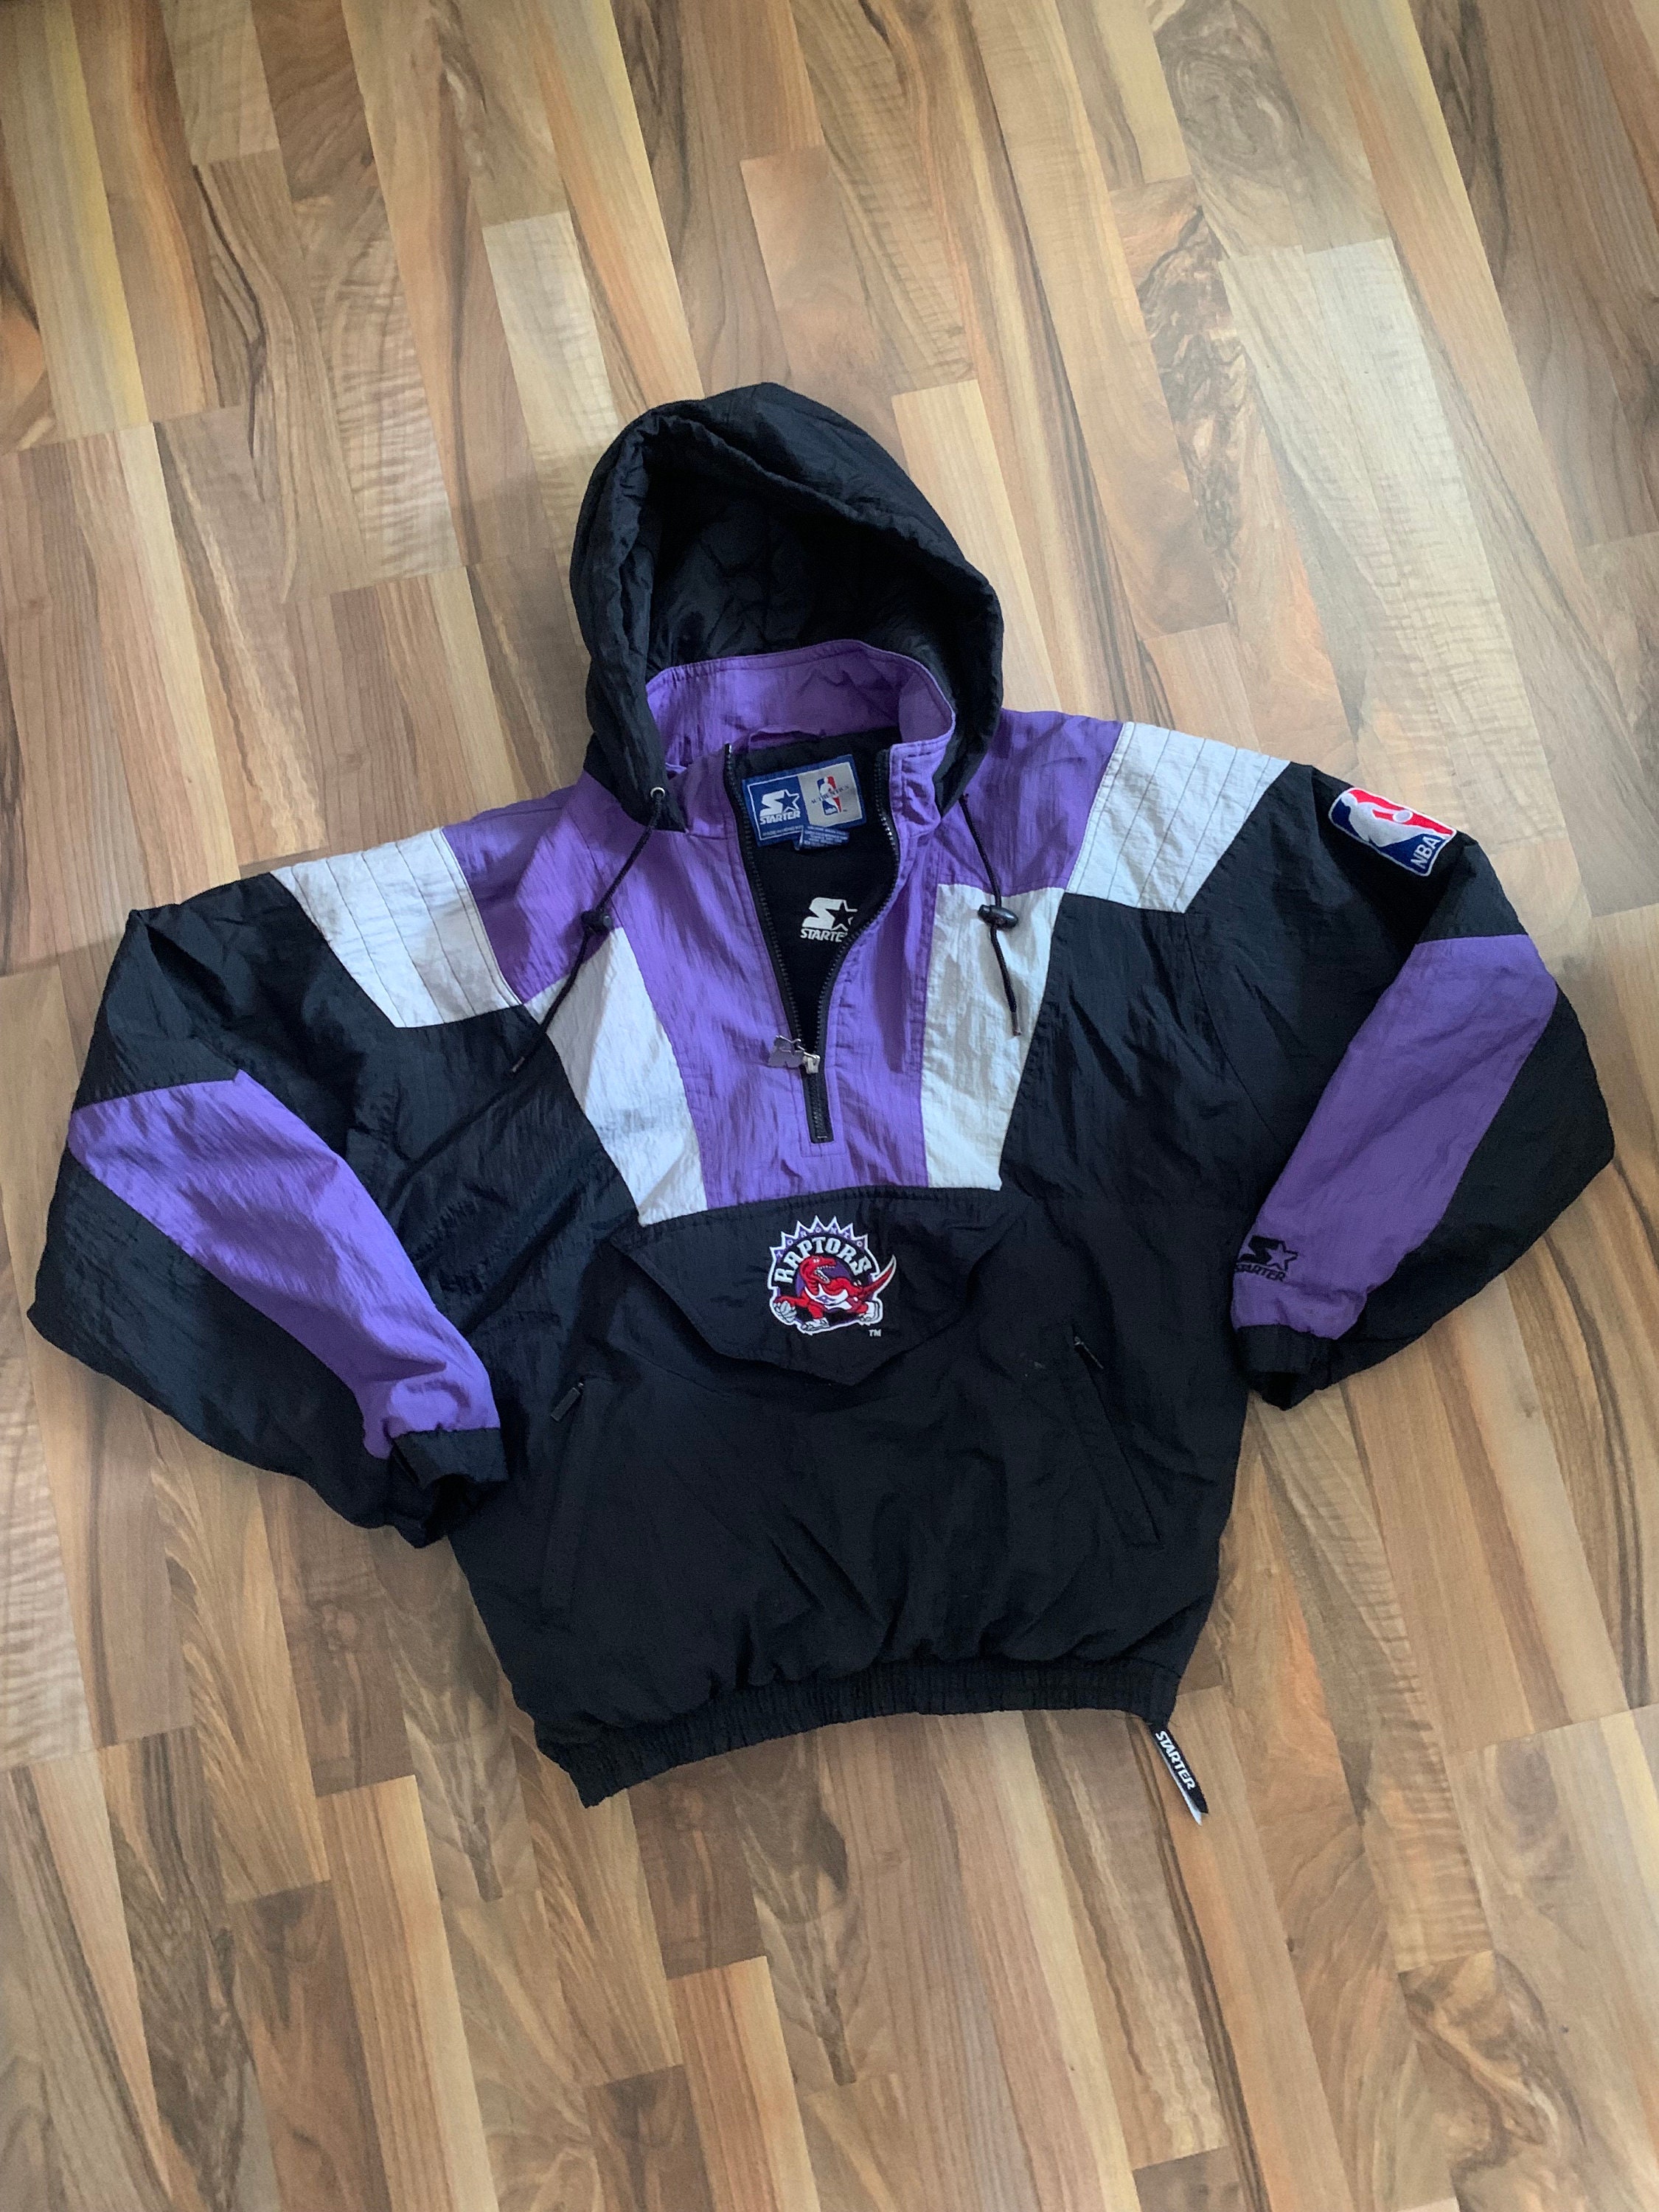 Men's vintage 90's Starter NBA Toronto Raptors windbreaker jacket size L